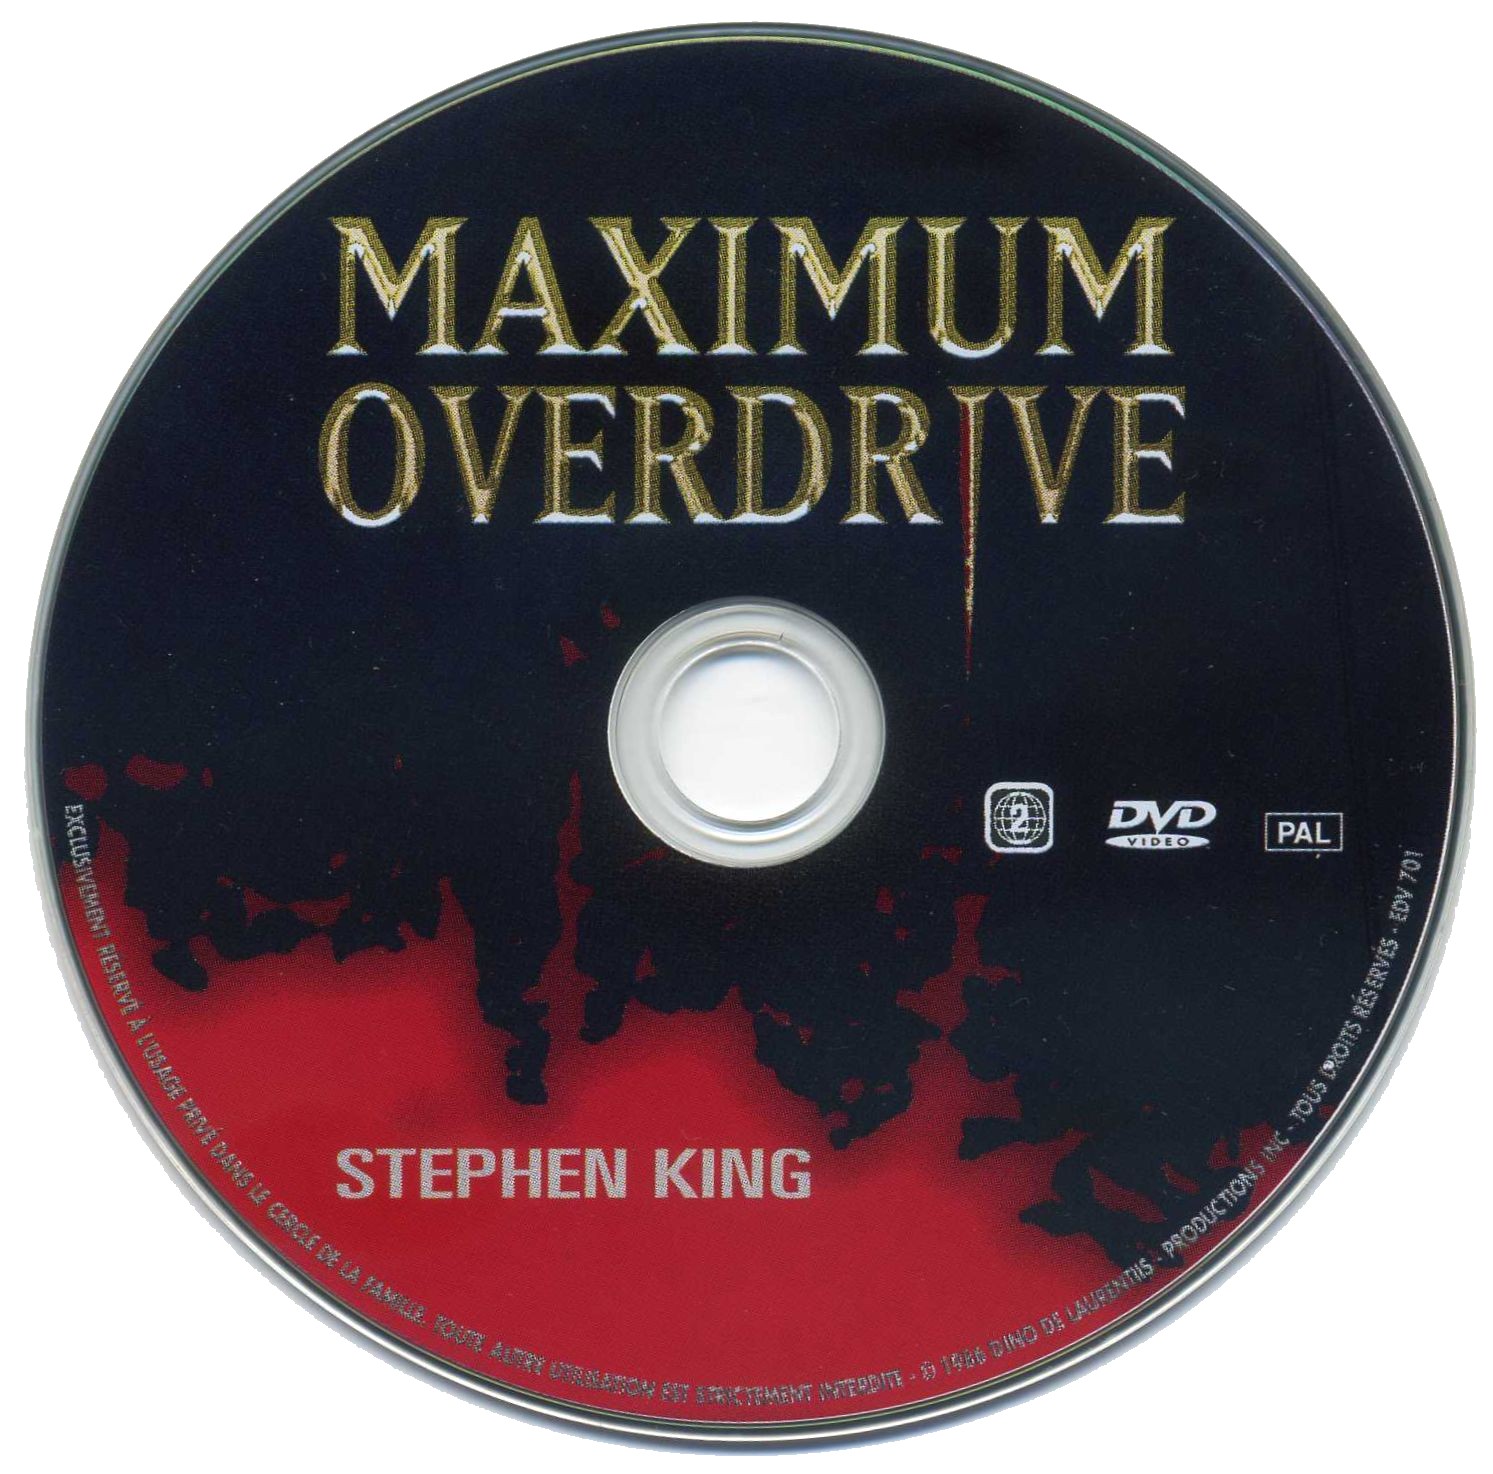 Maximum overdrive v3